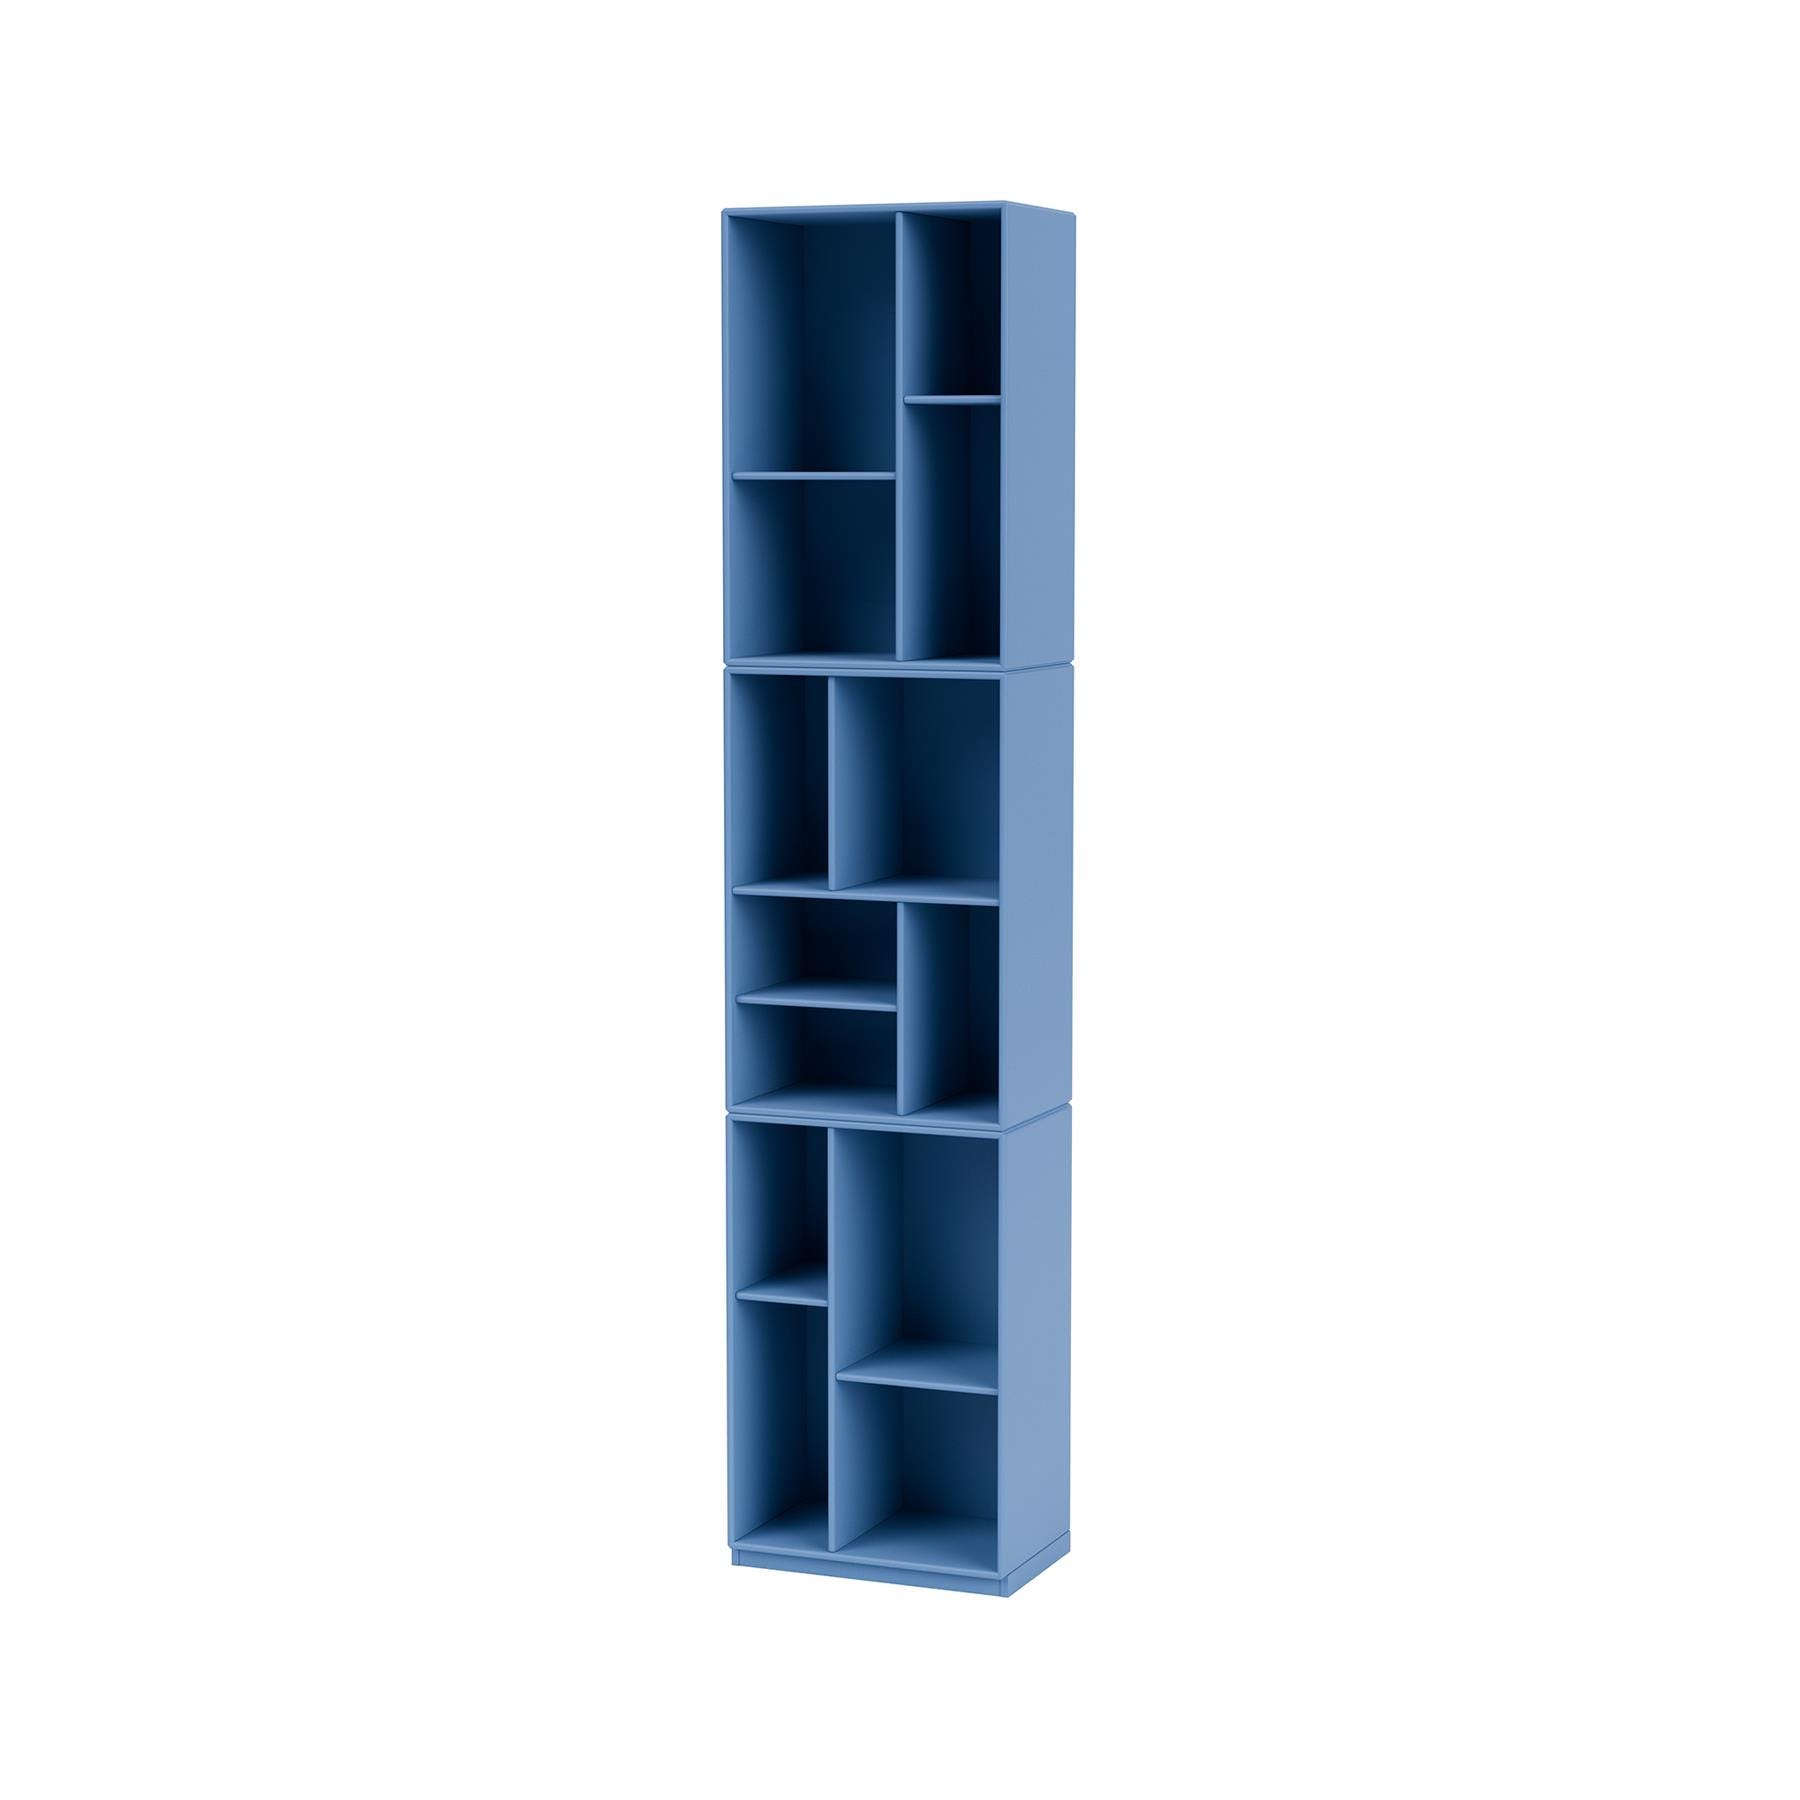 Montana Loom Slim Bookcase Azure Blue Designer Furniture From Holloways Of Ludlow